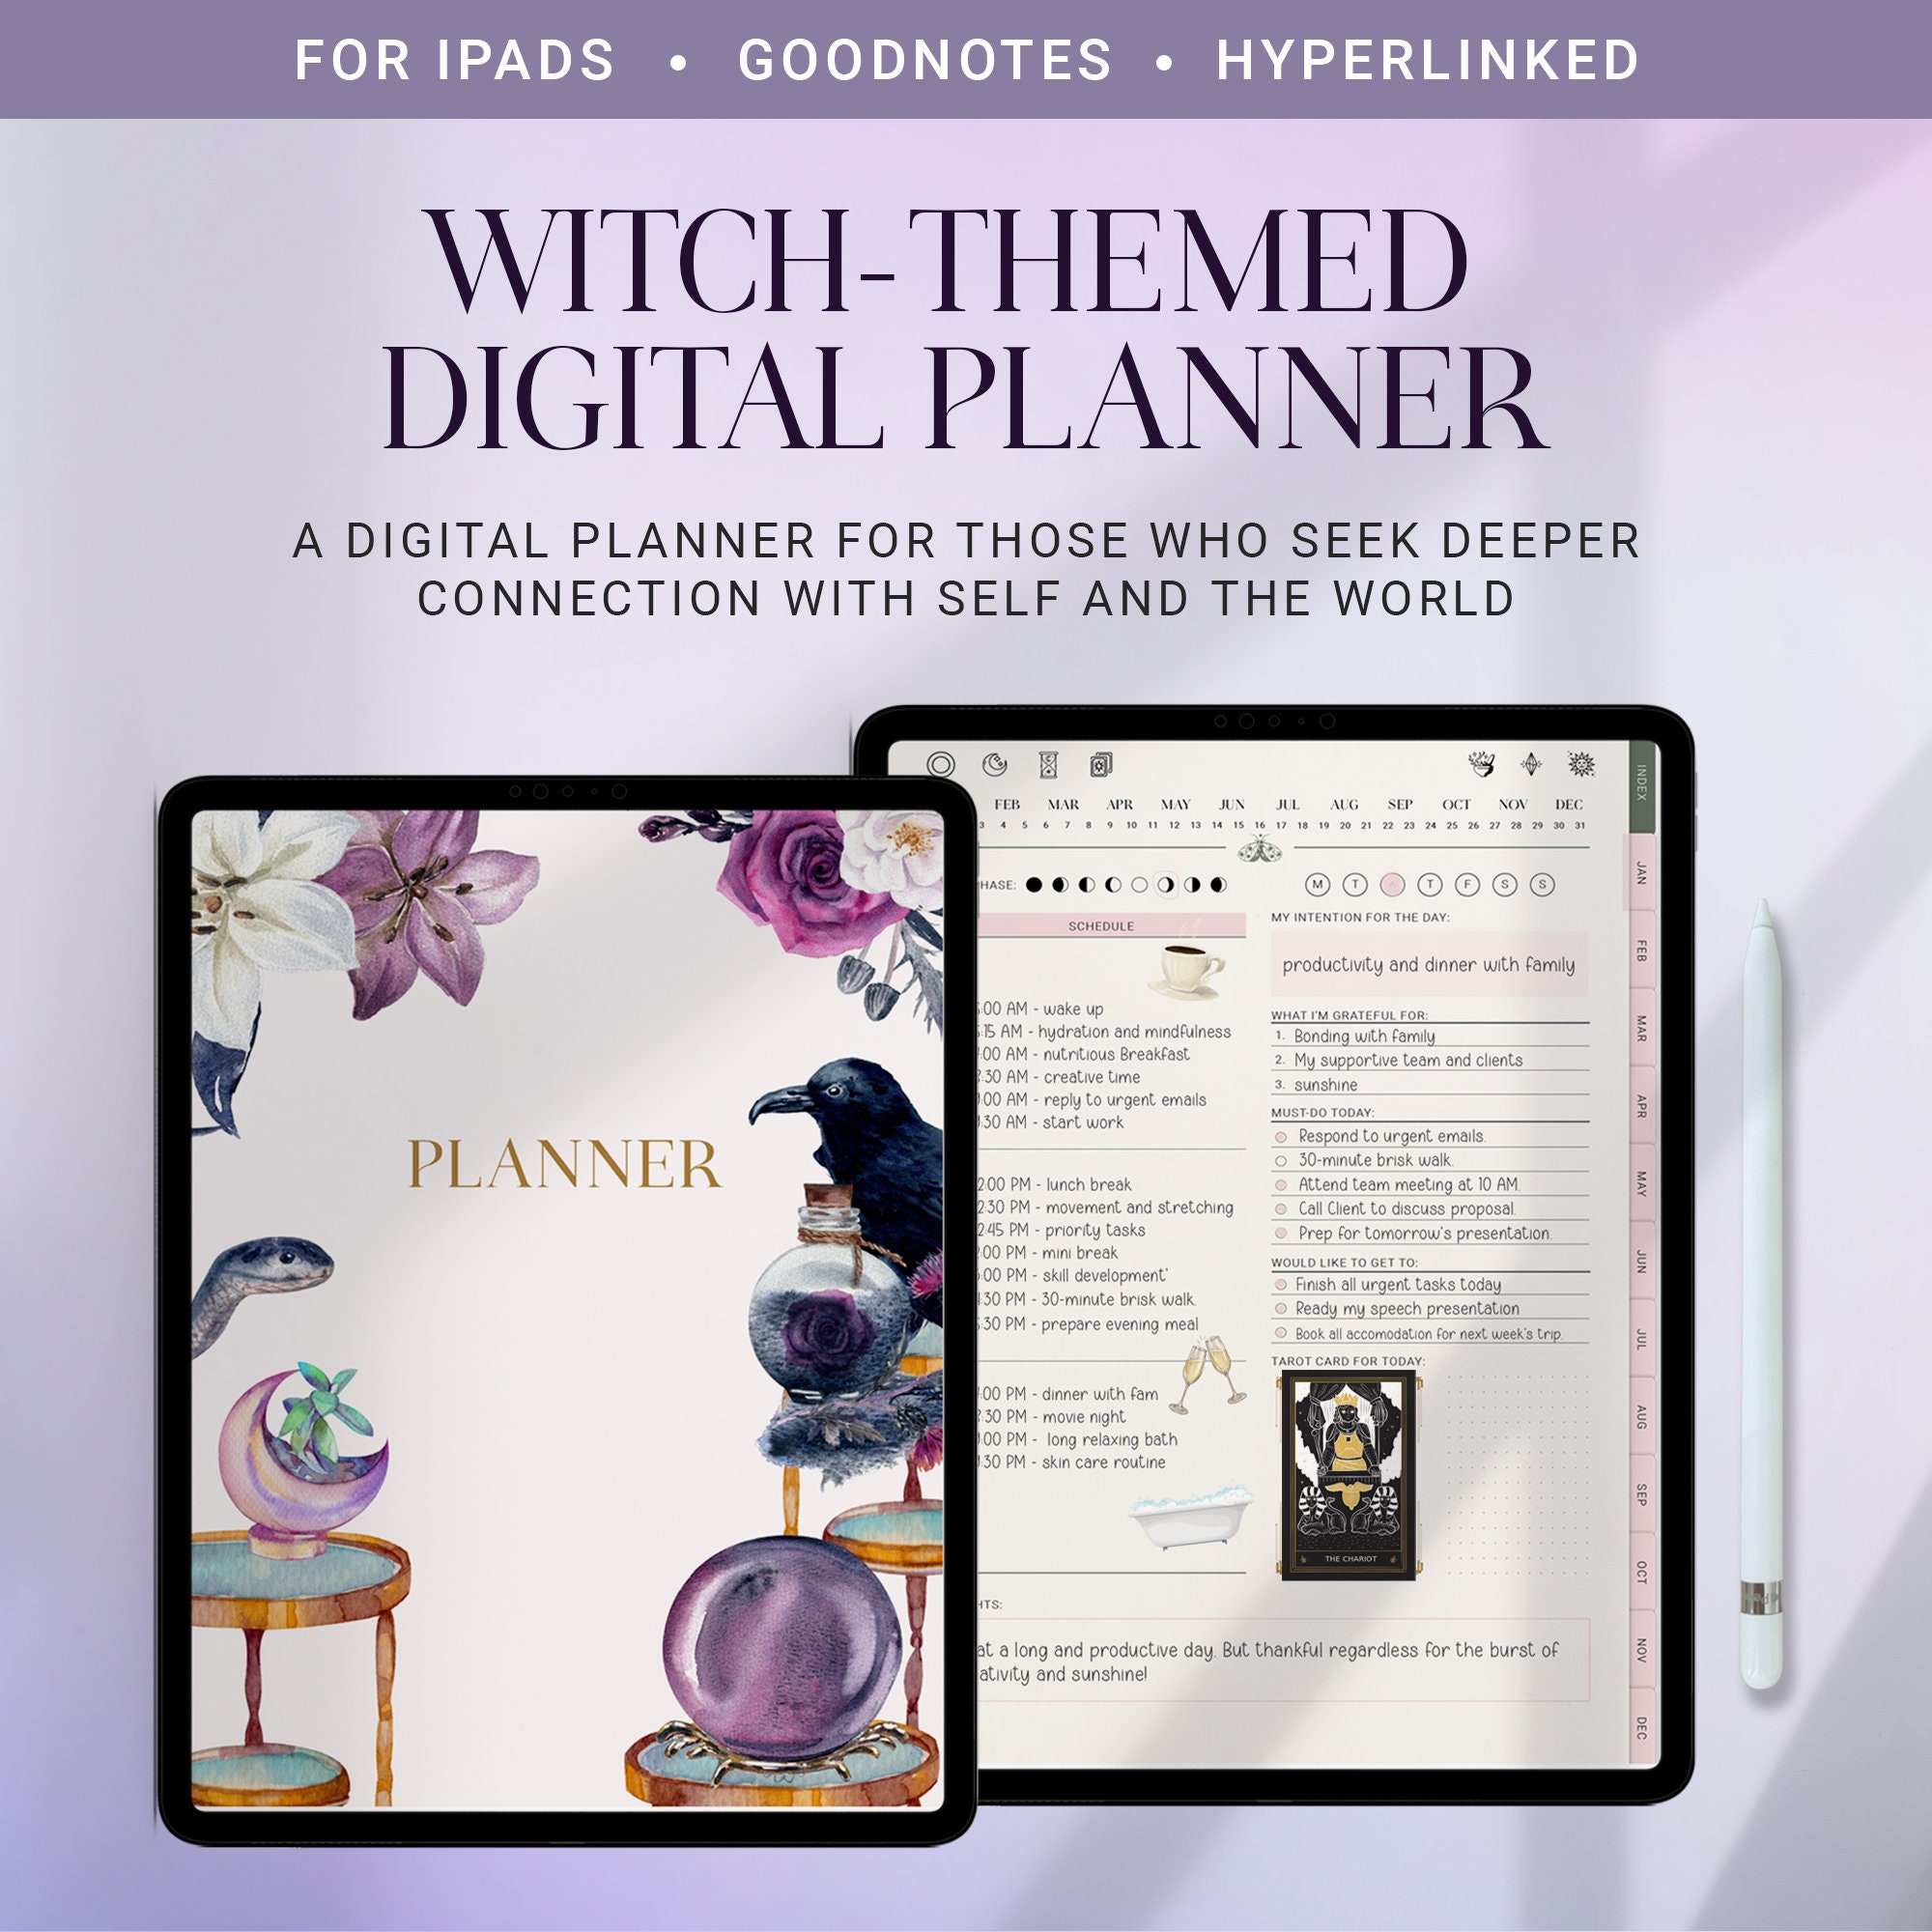 2024 Life Planner Digital Download – Pretty Spirits